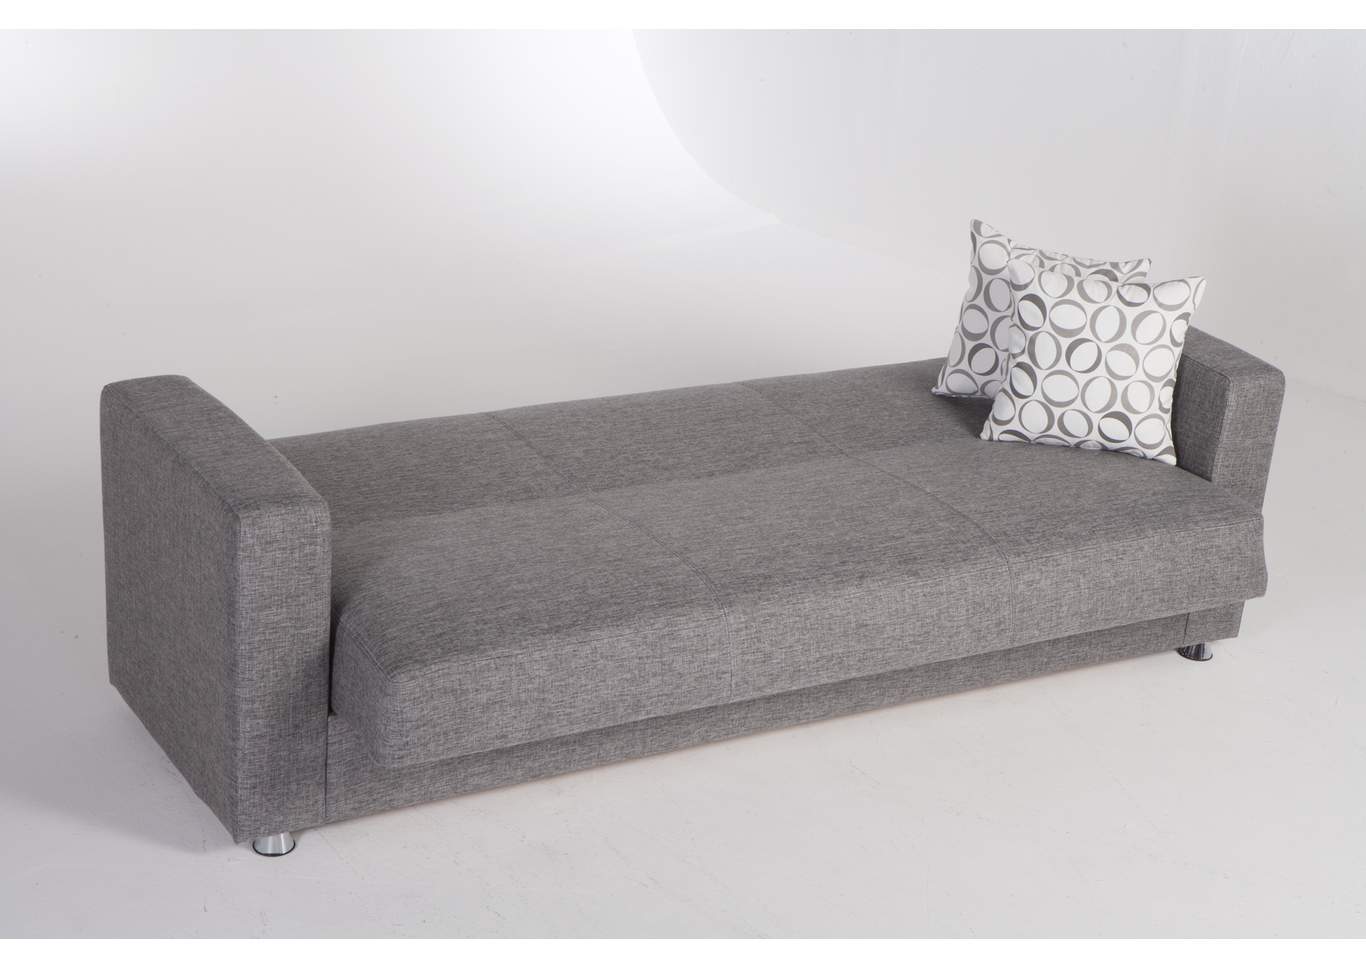 Tokyo Diego Gray 3 Seat Sleeper Sofa,Hudson Furniture & Bedding